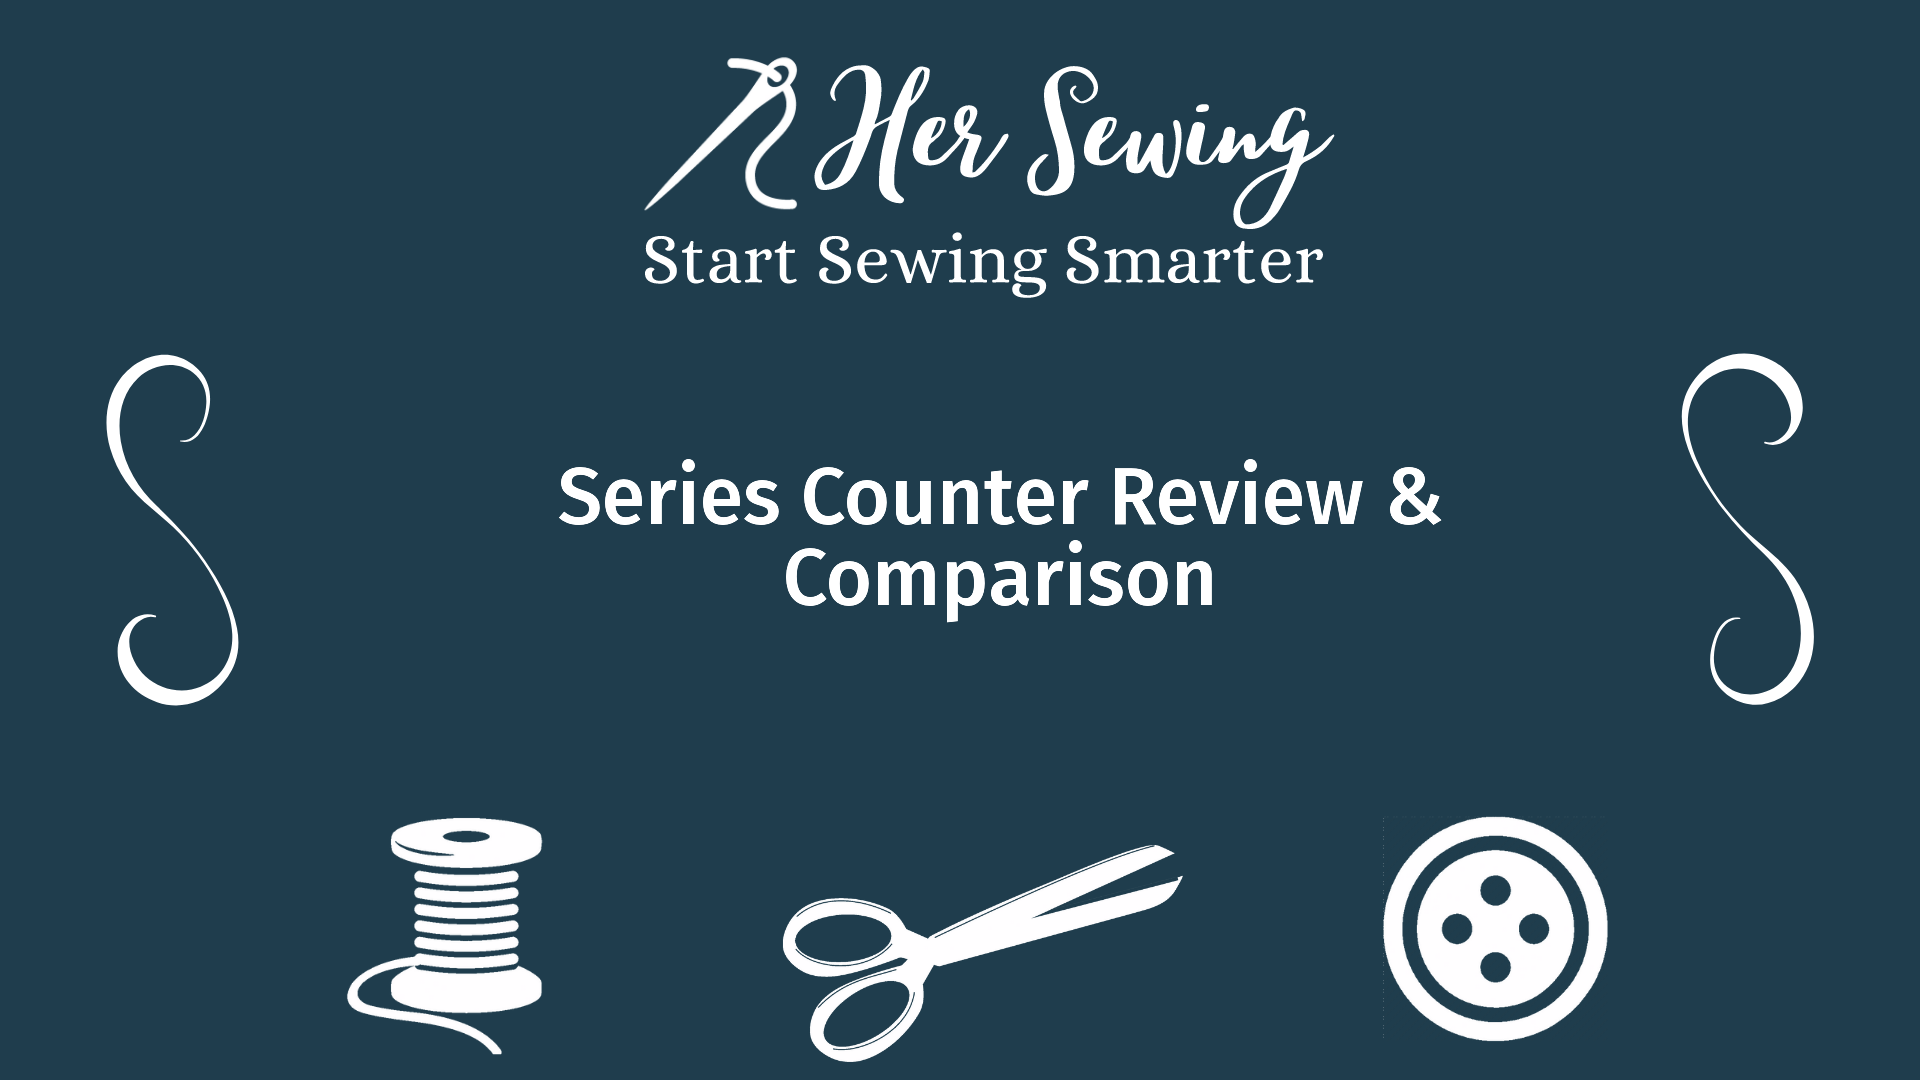 Series Counter Review & Comparison